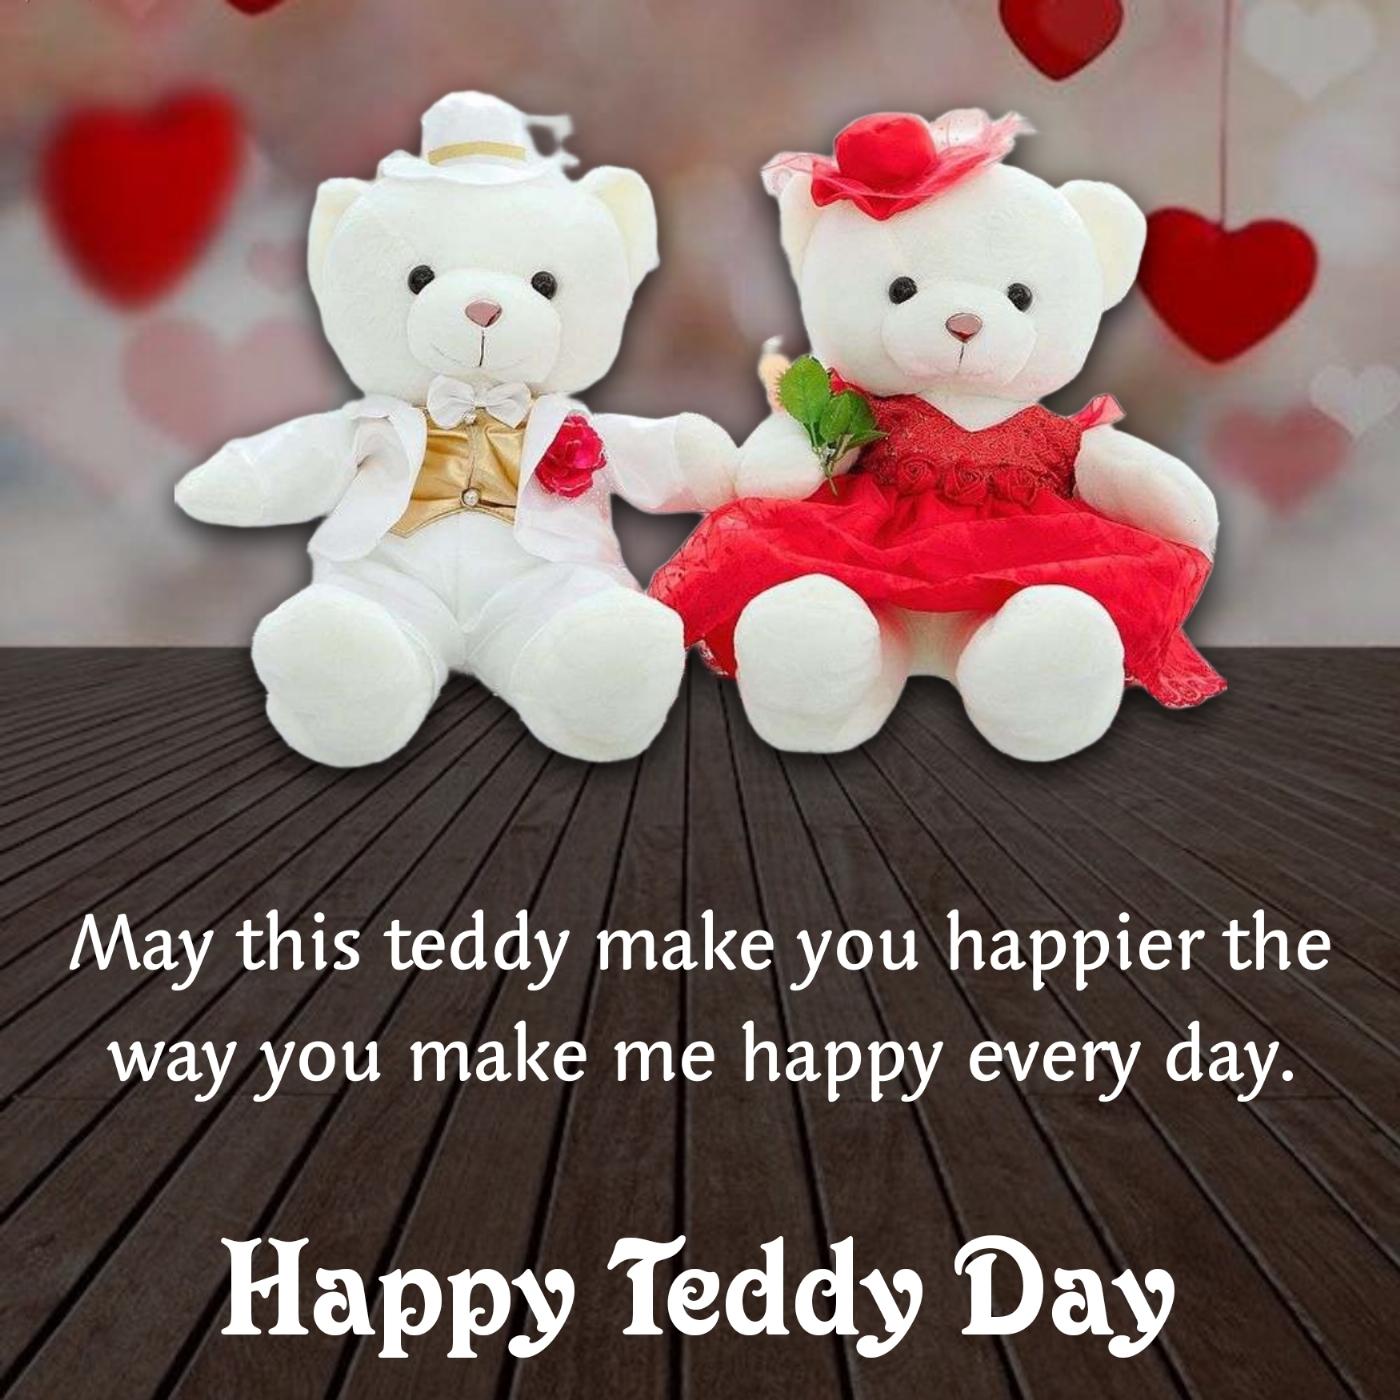 May this teddy make you happier the way you make